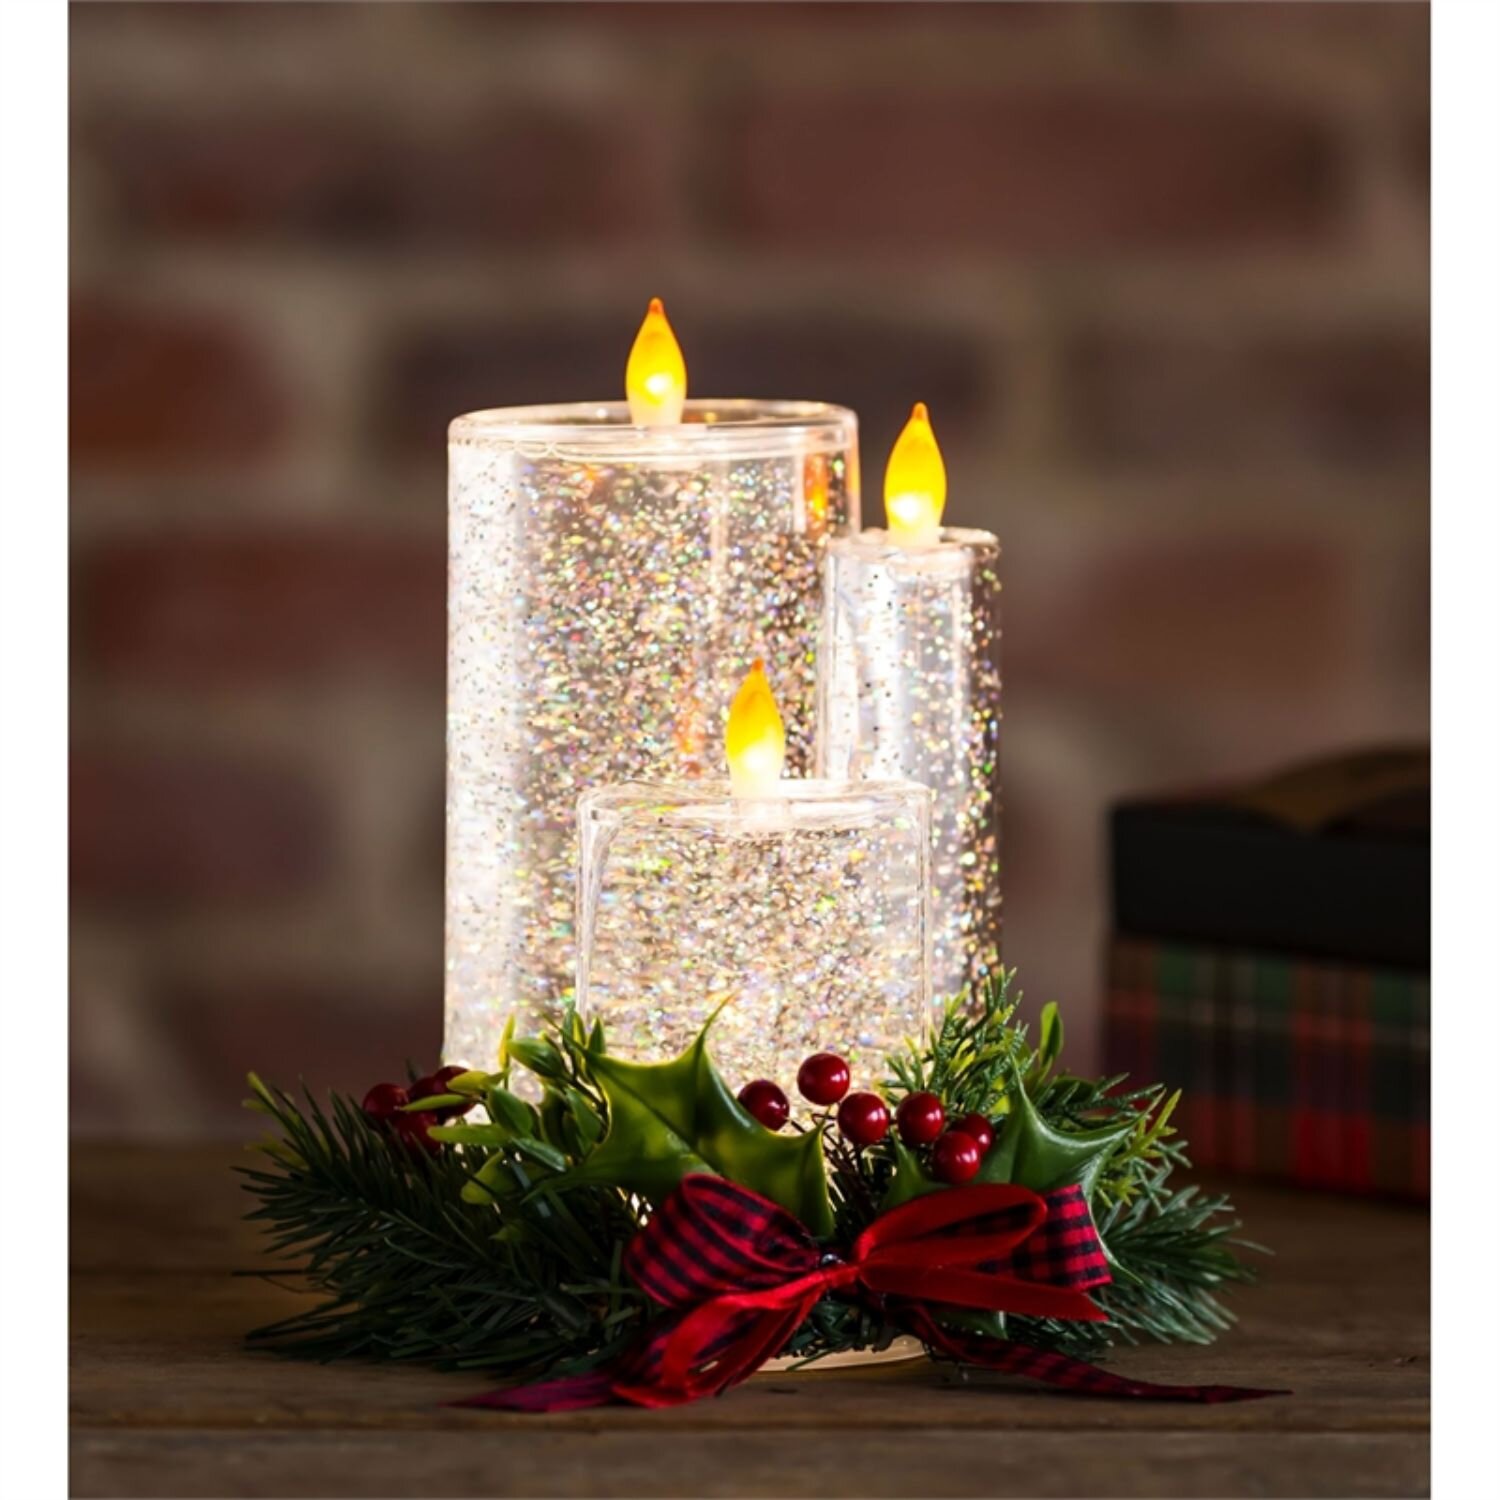 Clear Globe Flameless LED Candle Ornament WHITE